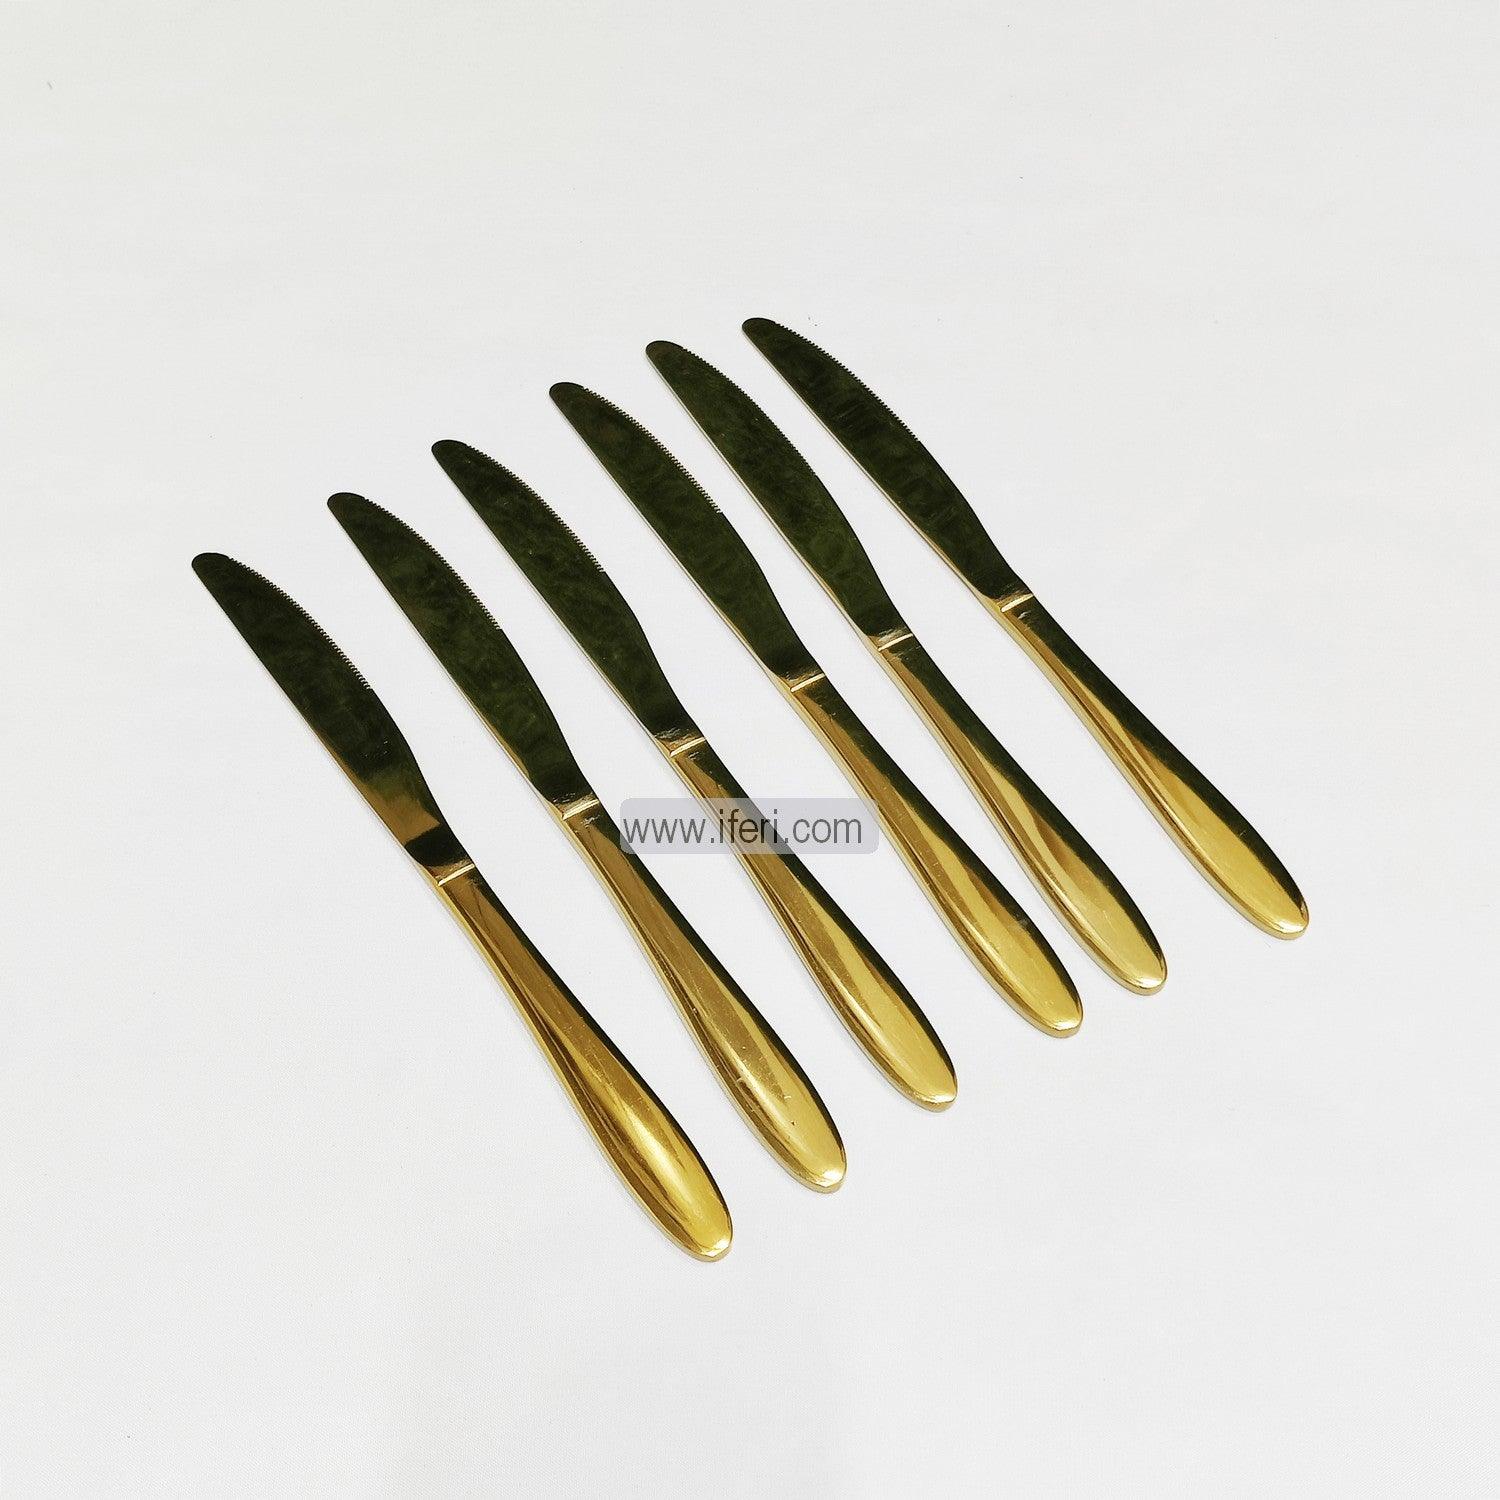 6 Pcs 9 inch Stainless Steel Golden Dinner Knife Set EB9136 Price in Bangladesh - iferi.com